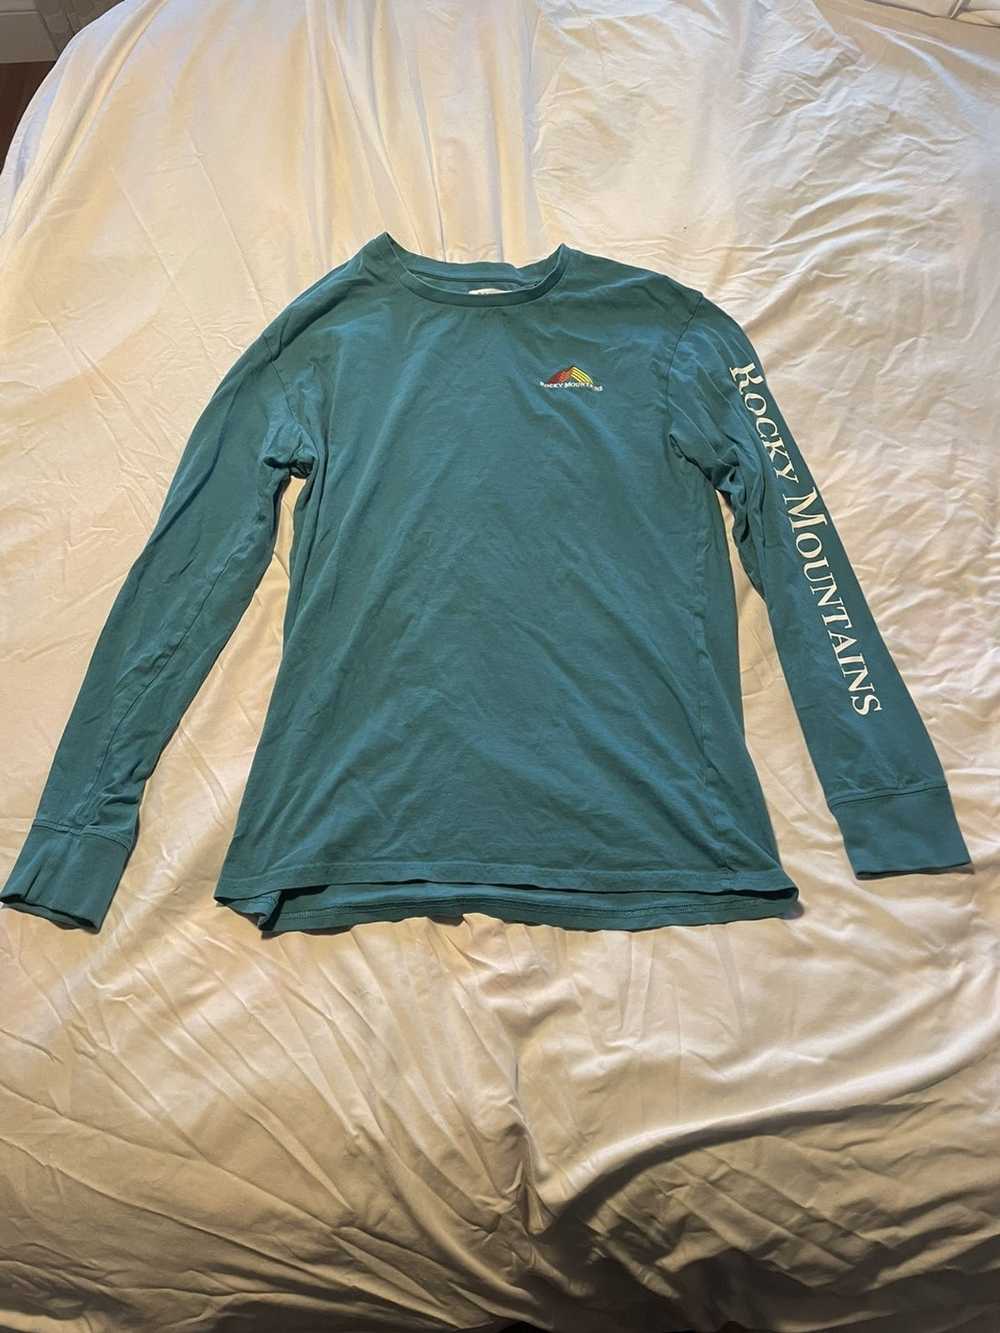 Pacsun Long Sleeve Rocky Mountain T-Shirt - image 1